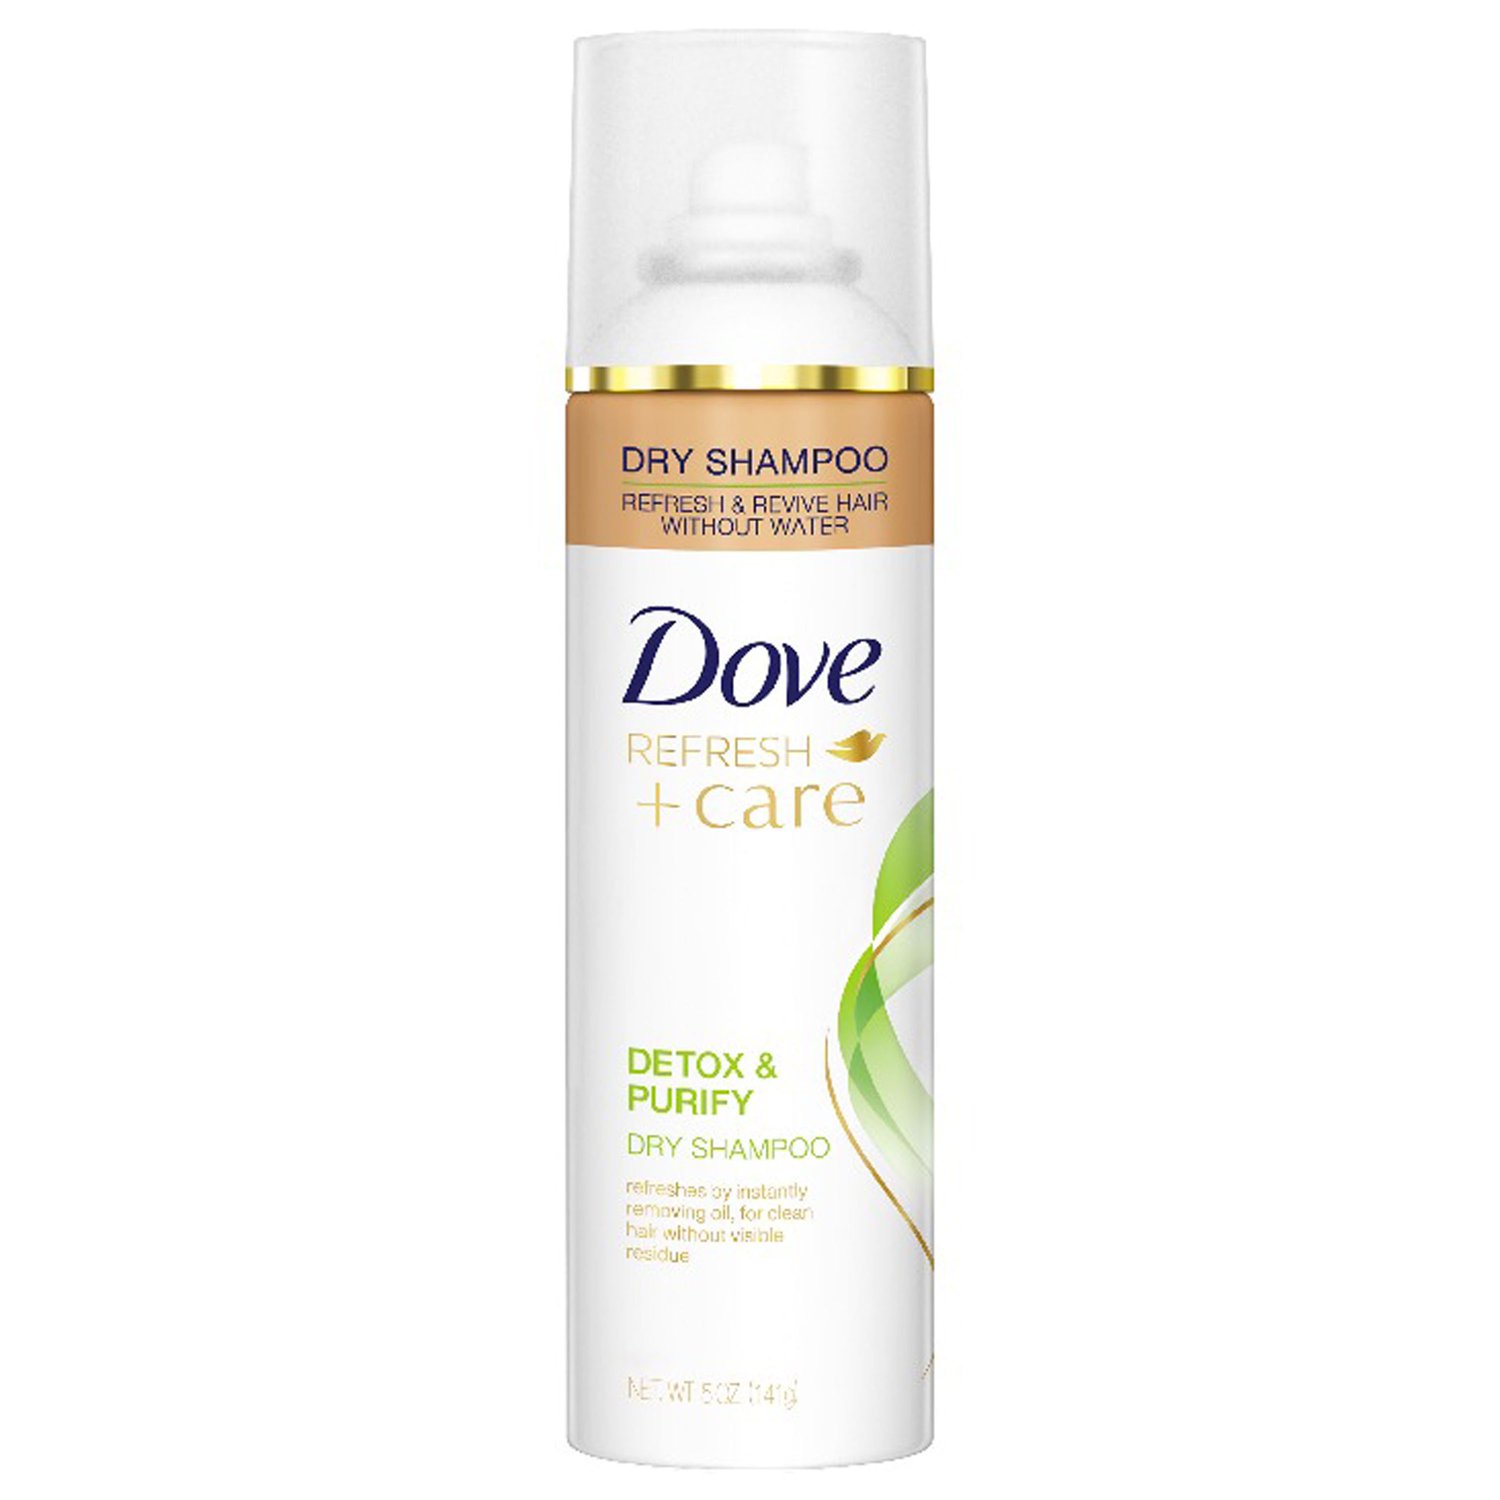 Dove Refresh+Care Detox and Purify Dry Shampoo, 5 oz - image 1 of 9